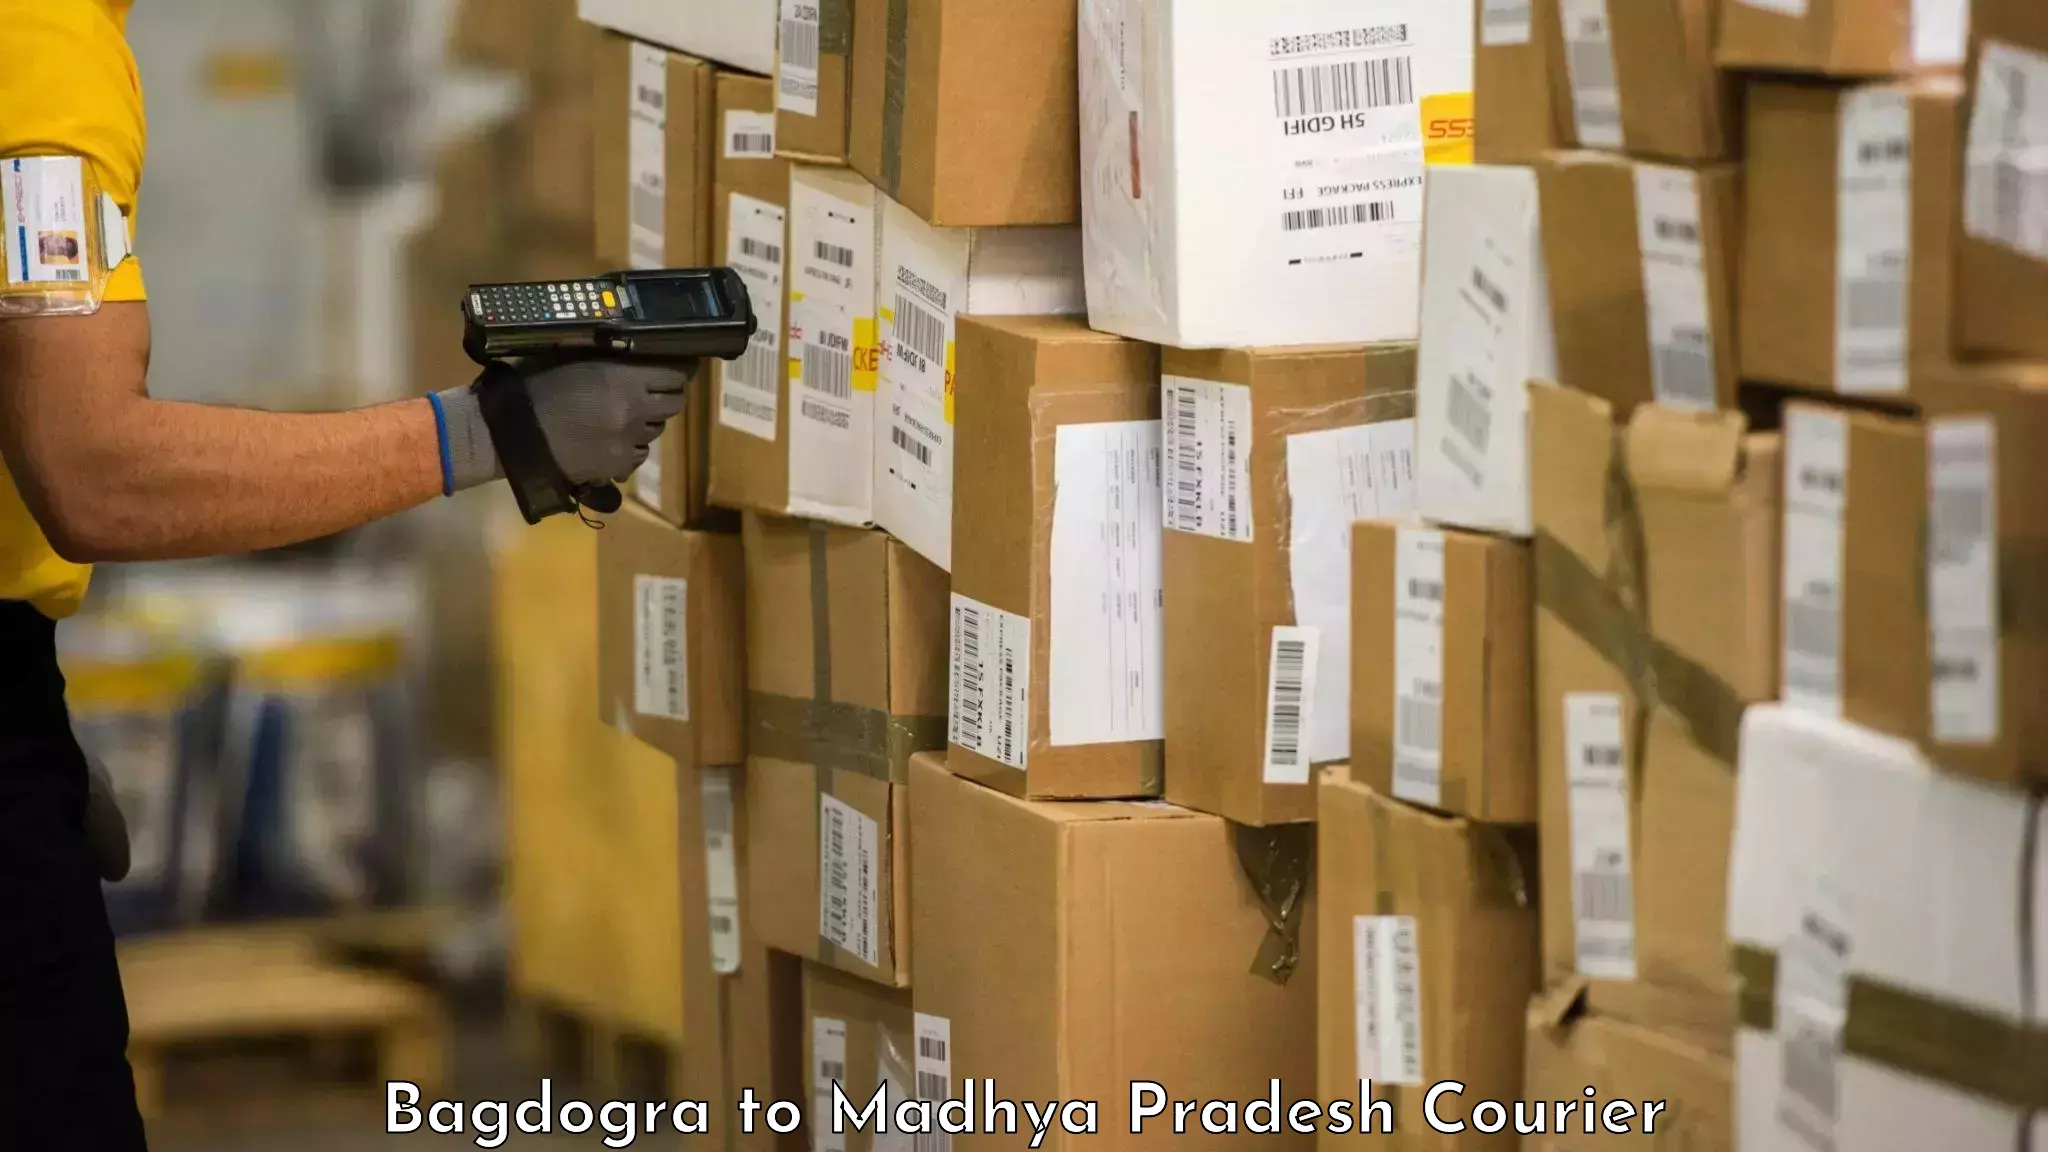 Baggage shipping experience Bagdogra to Bichhiya